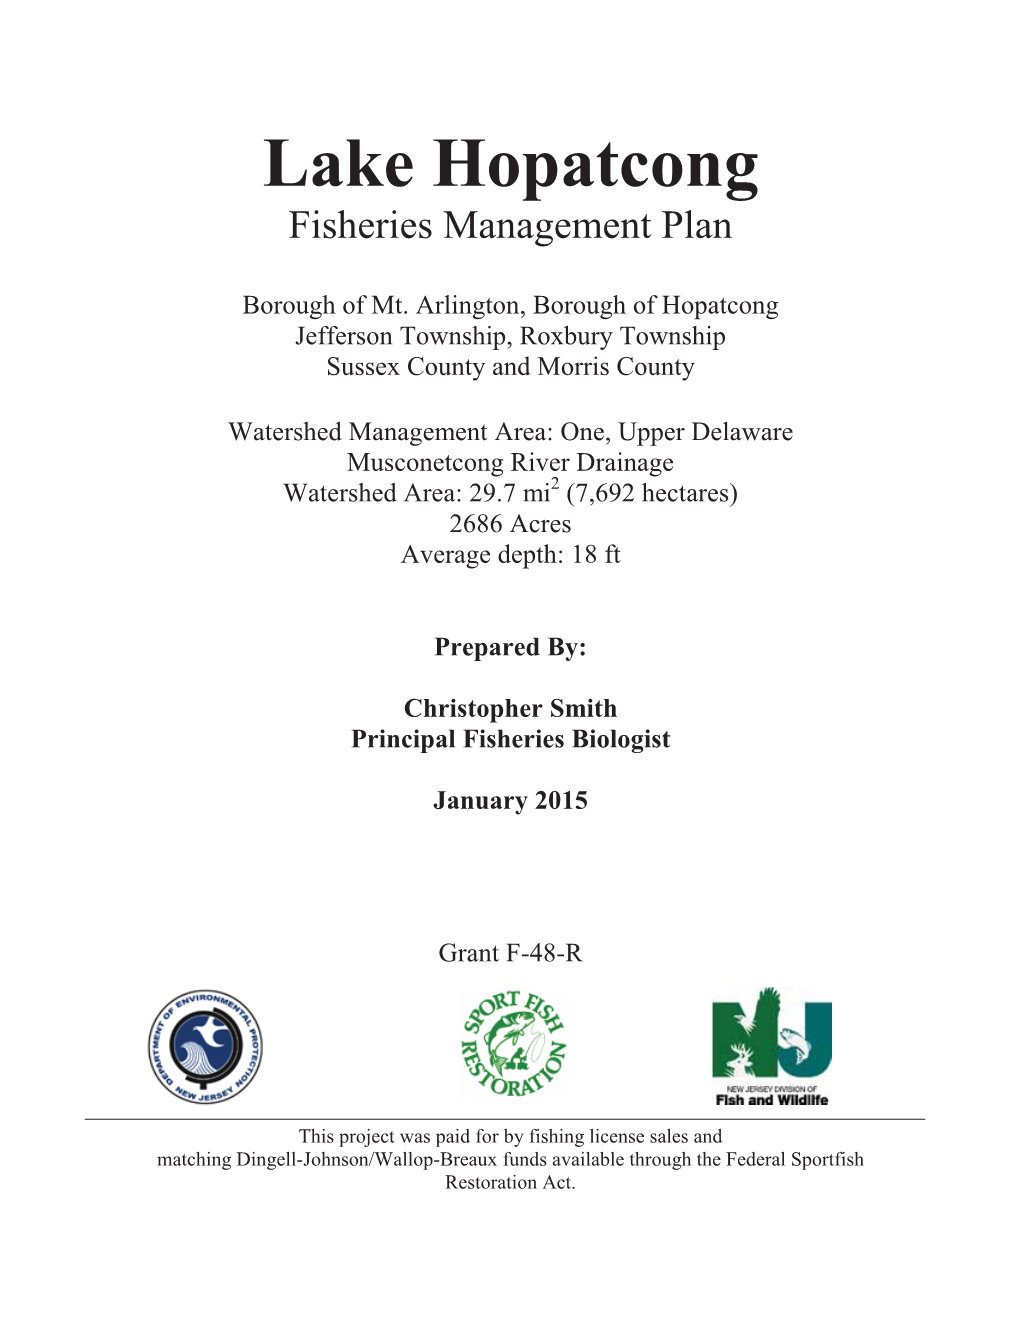 Lake Hopatcong Fisheries Management Plan